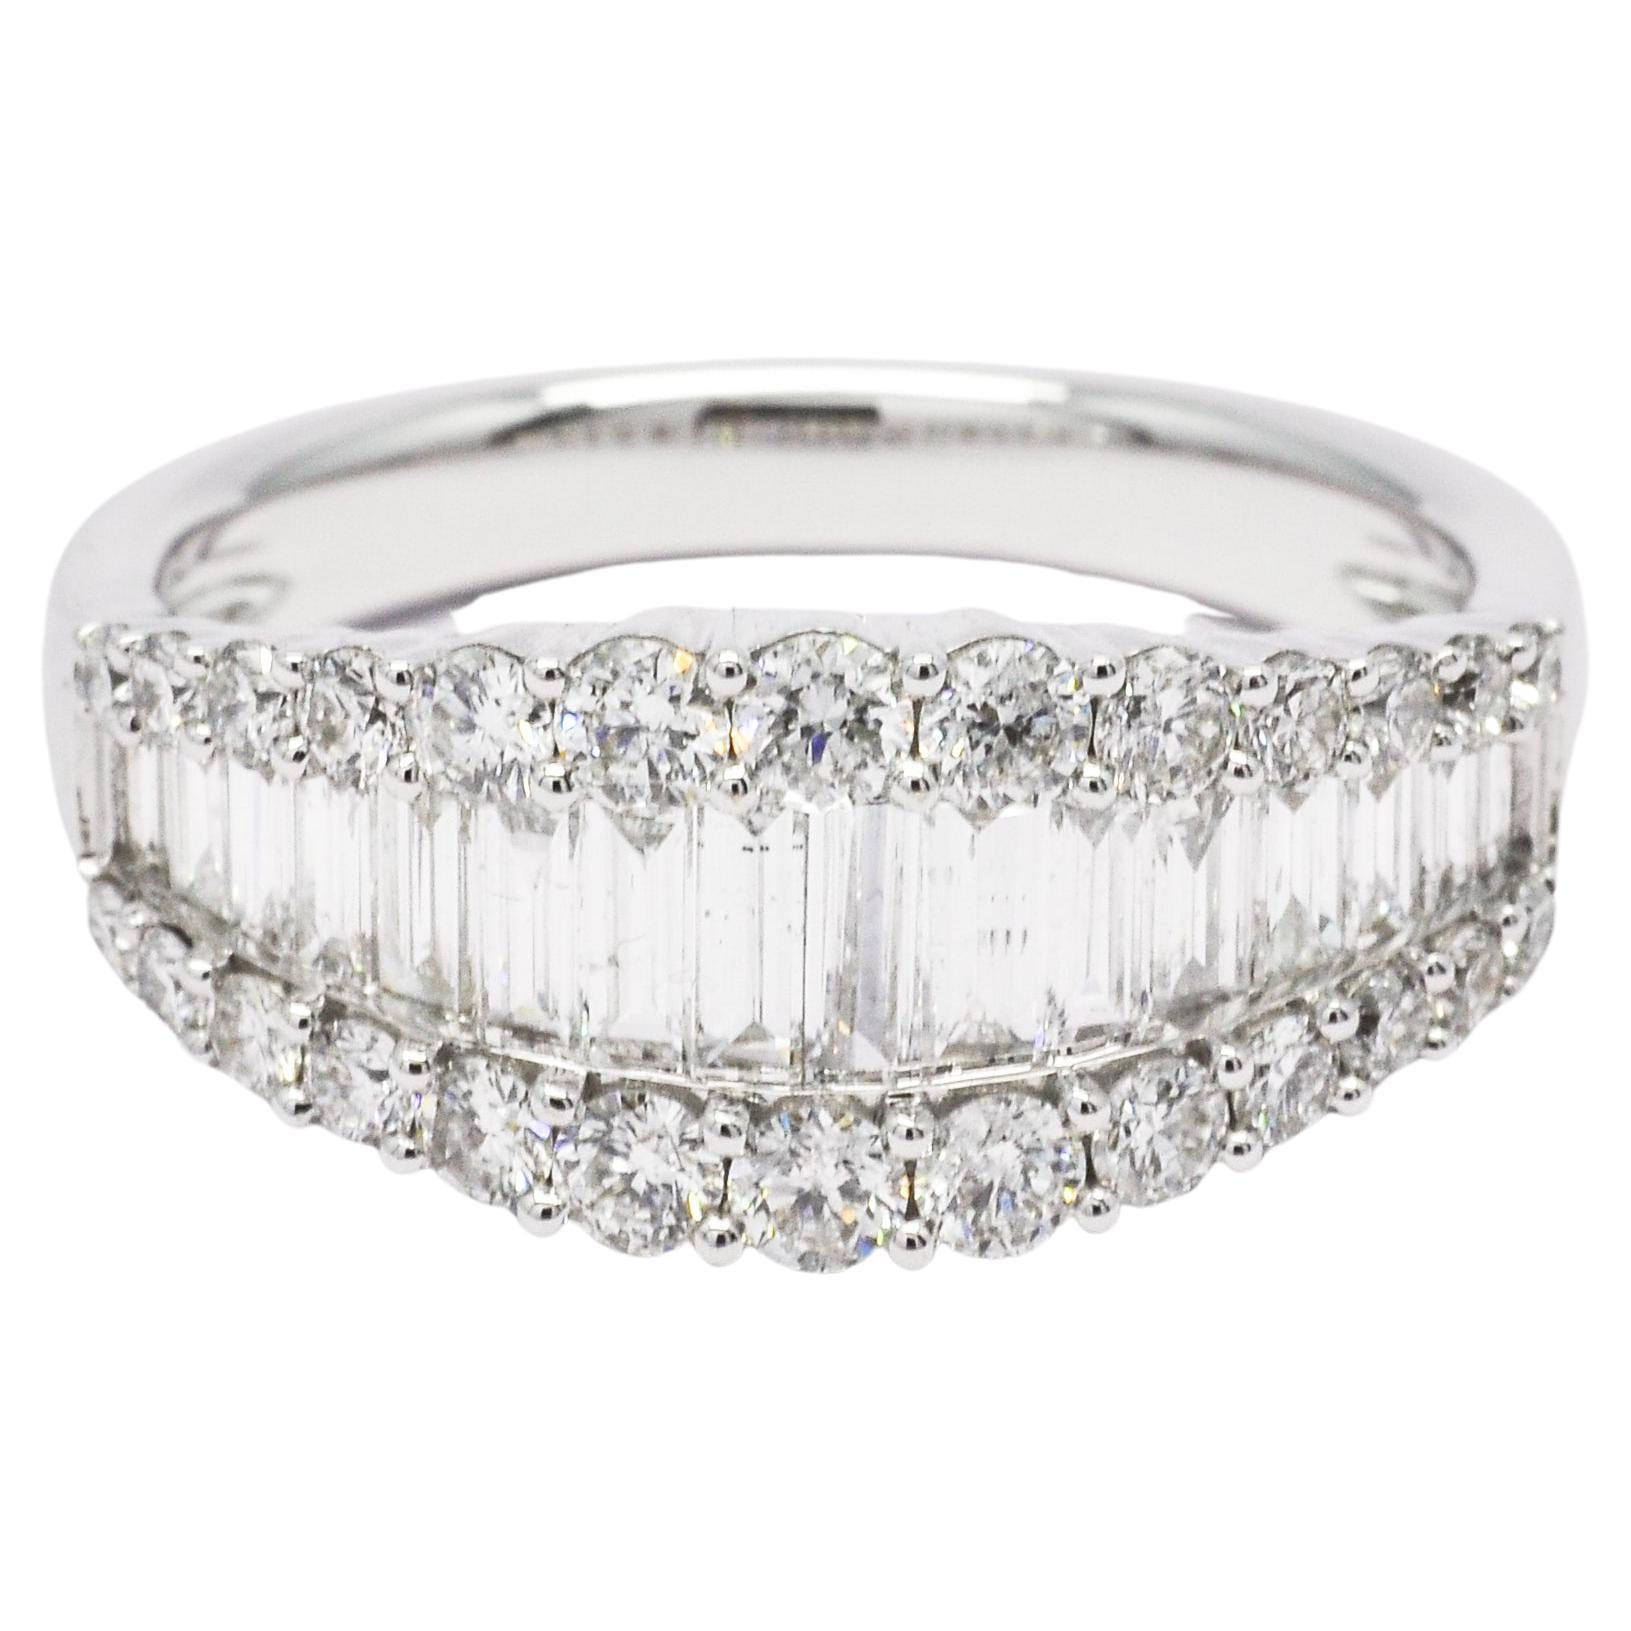 Natural Diamond Ring 1.45 cts 18 Karat White Gold Wedding Anniversary Band